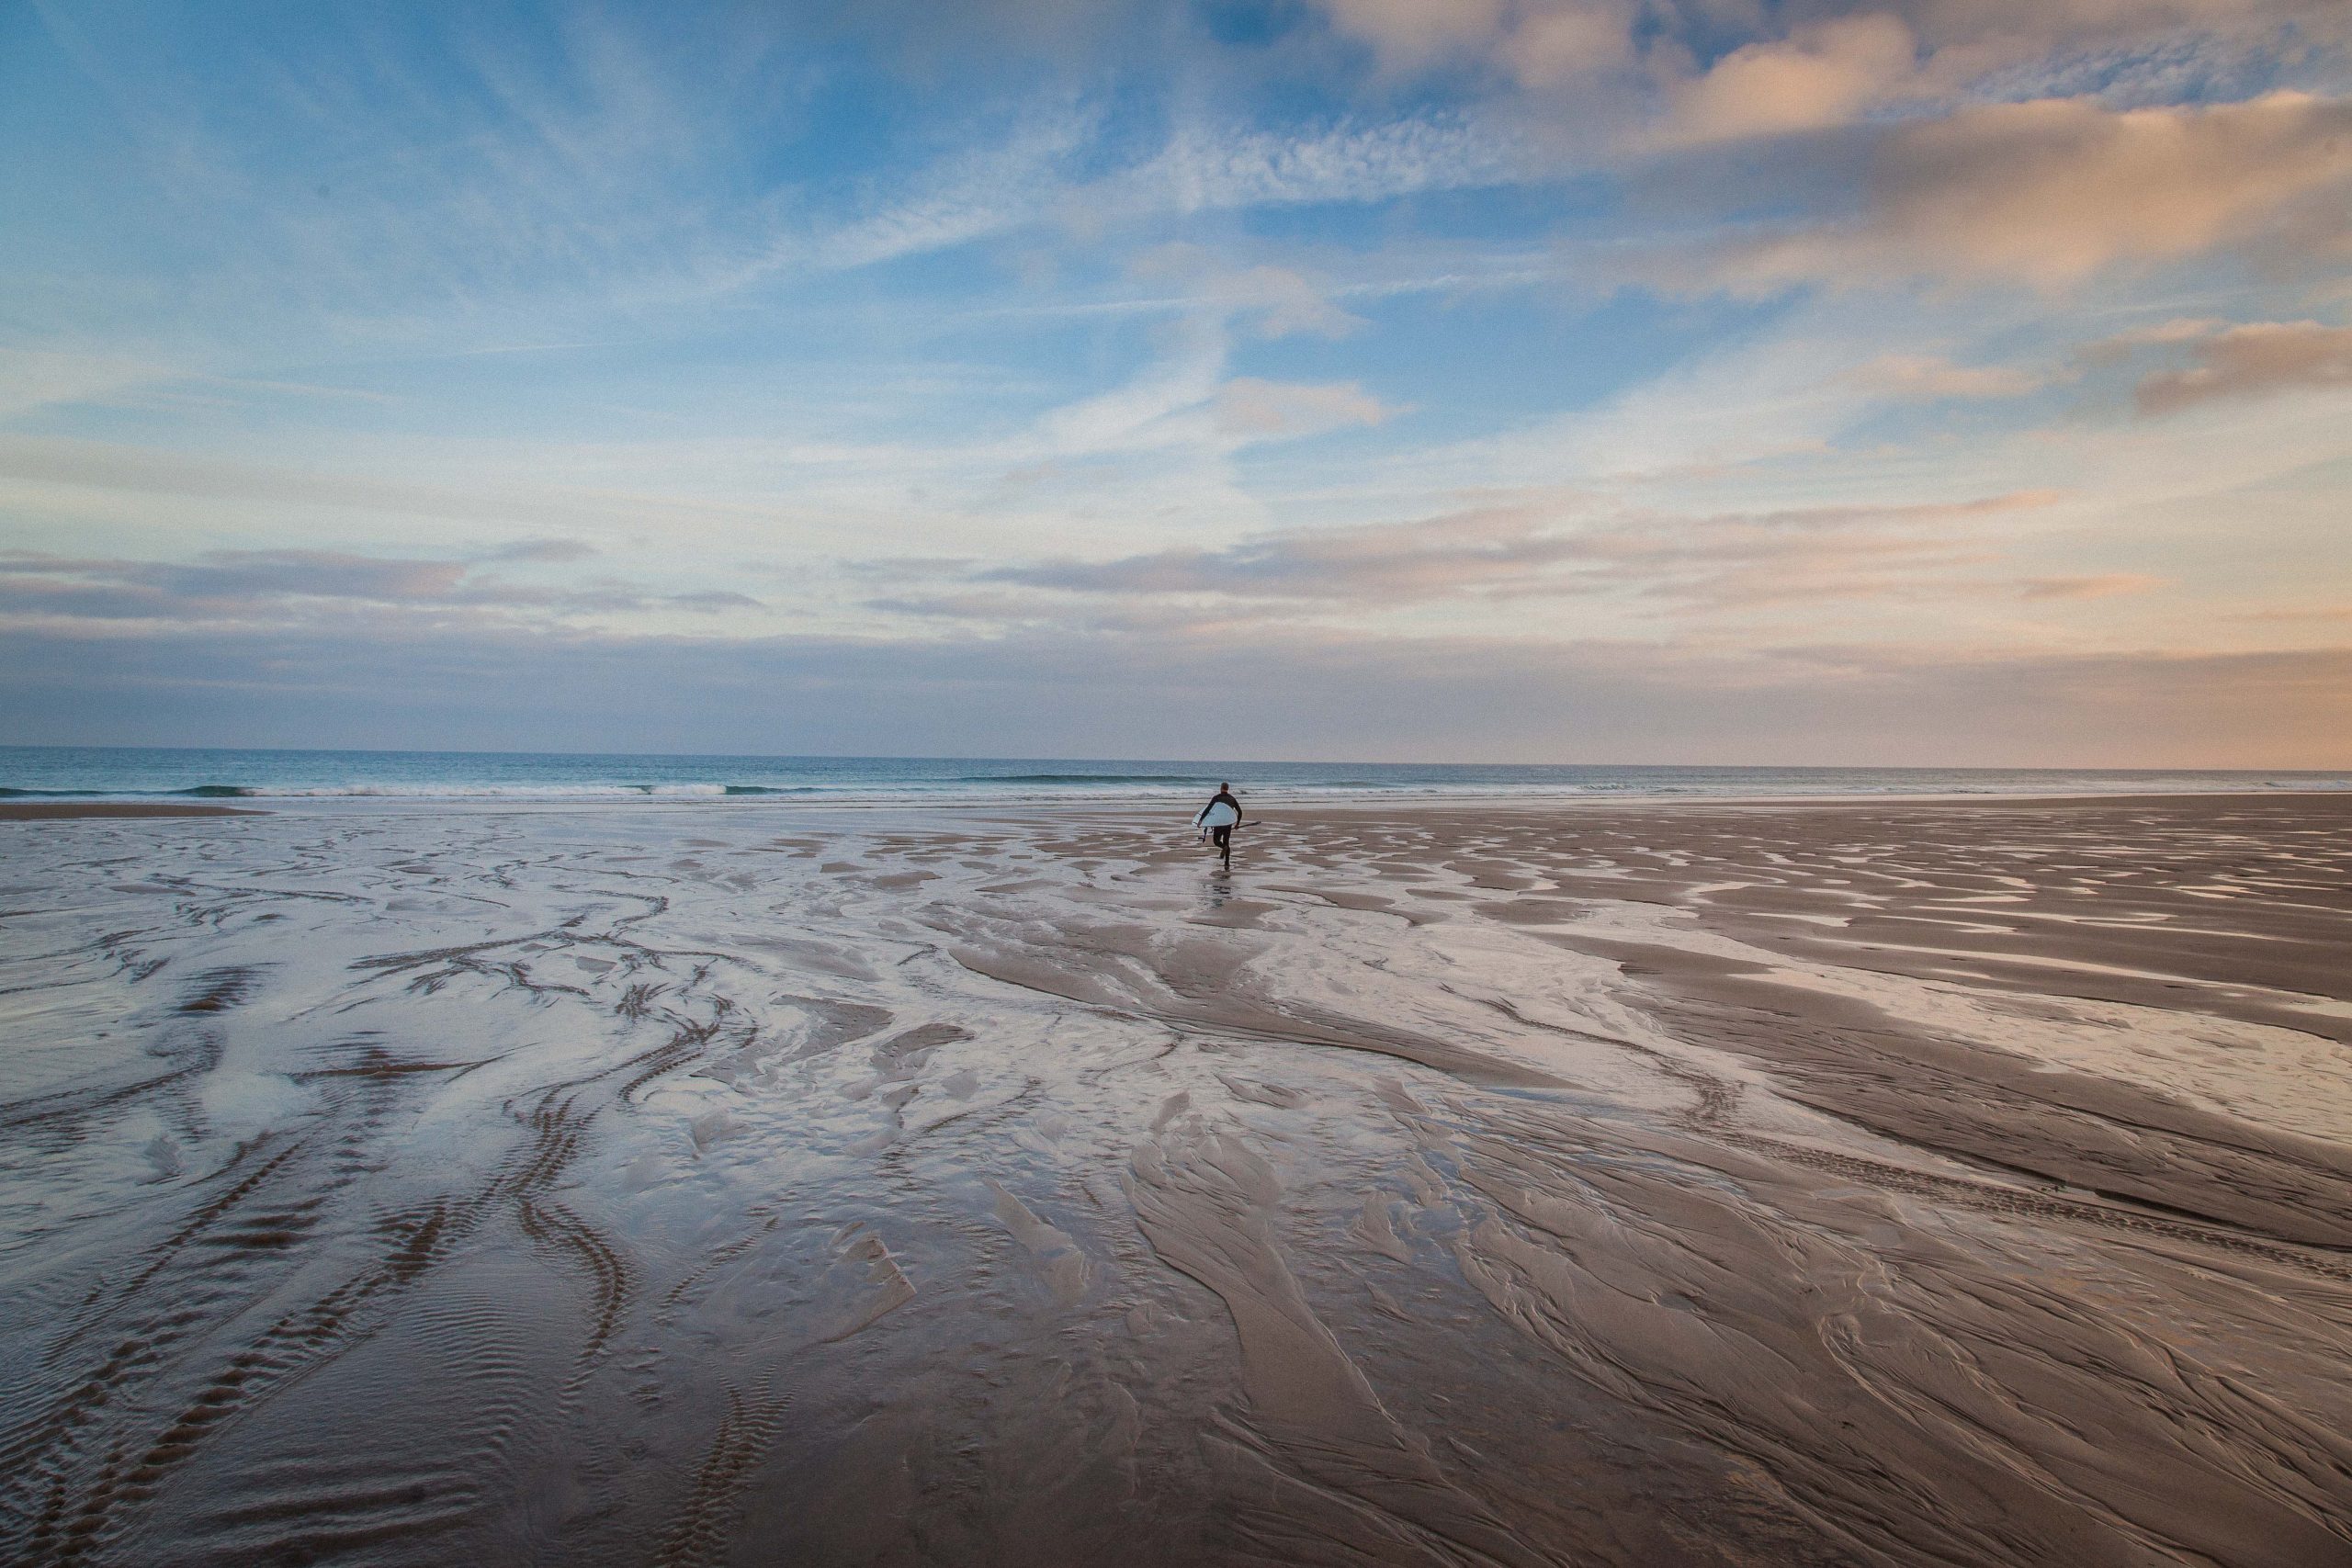 The lone surfer at Porthtowan, Cornwall